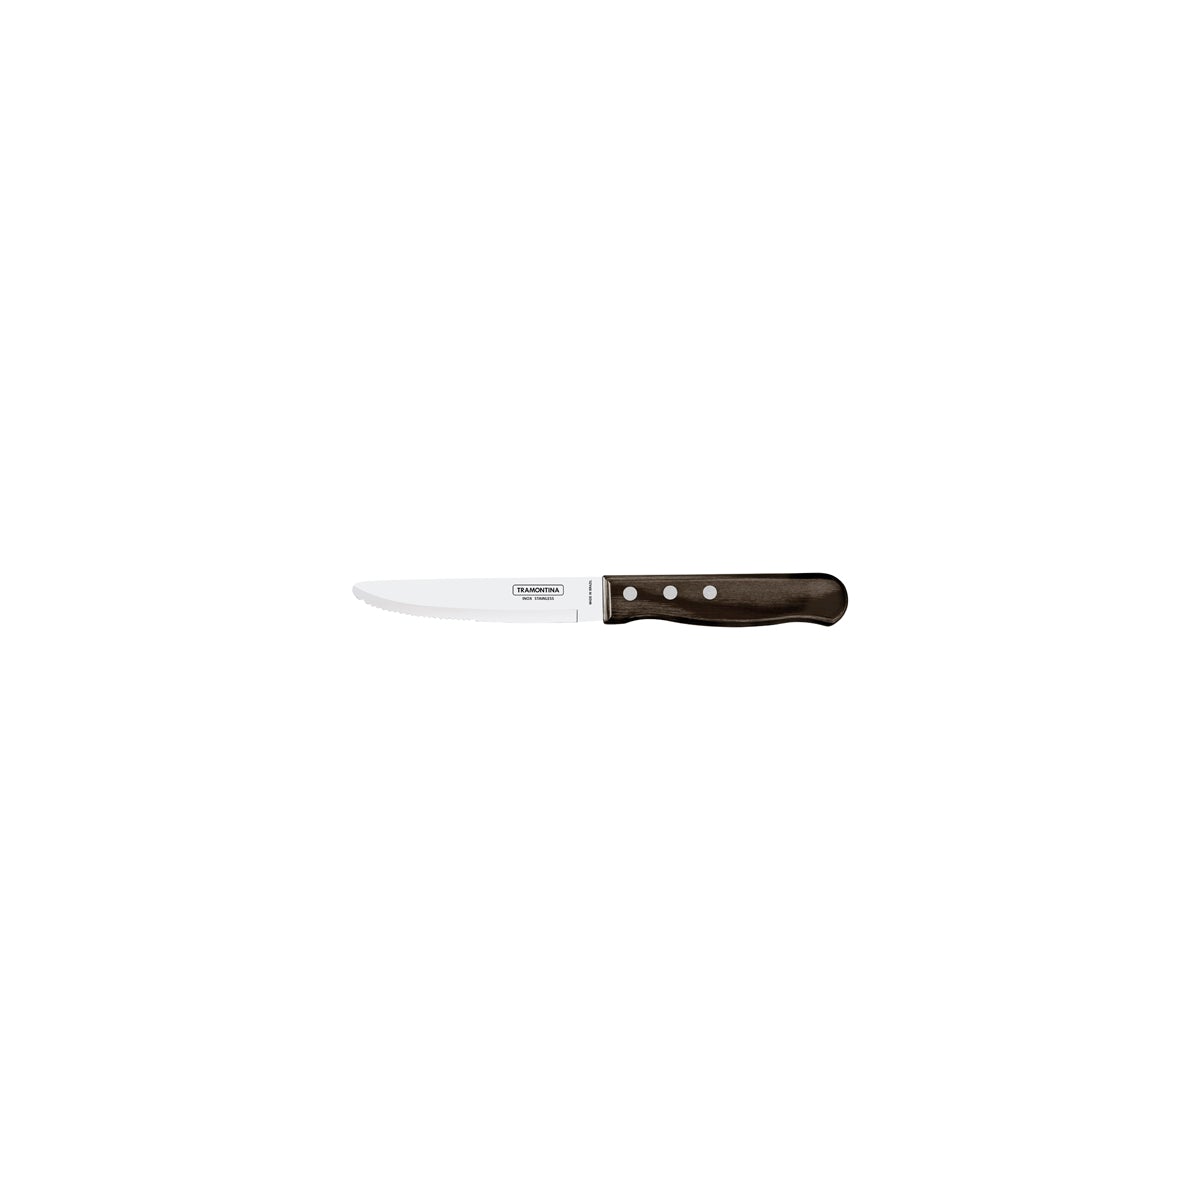 TM21115/095 Tramontina Churrasco Steak Knife Serrated Wide Blade with Polywood Handle Brown 152mm Tomkin Australia Hospitality Supplies